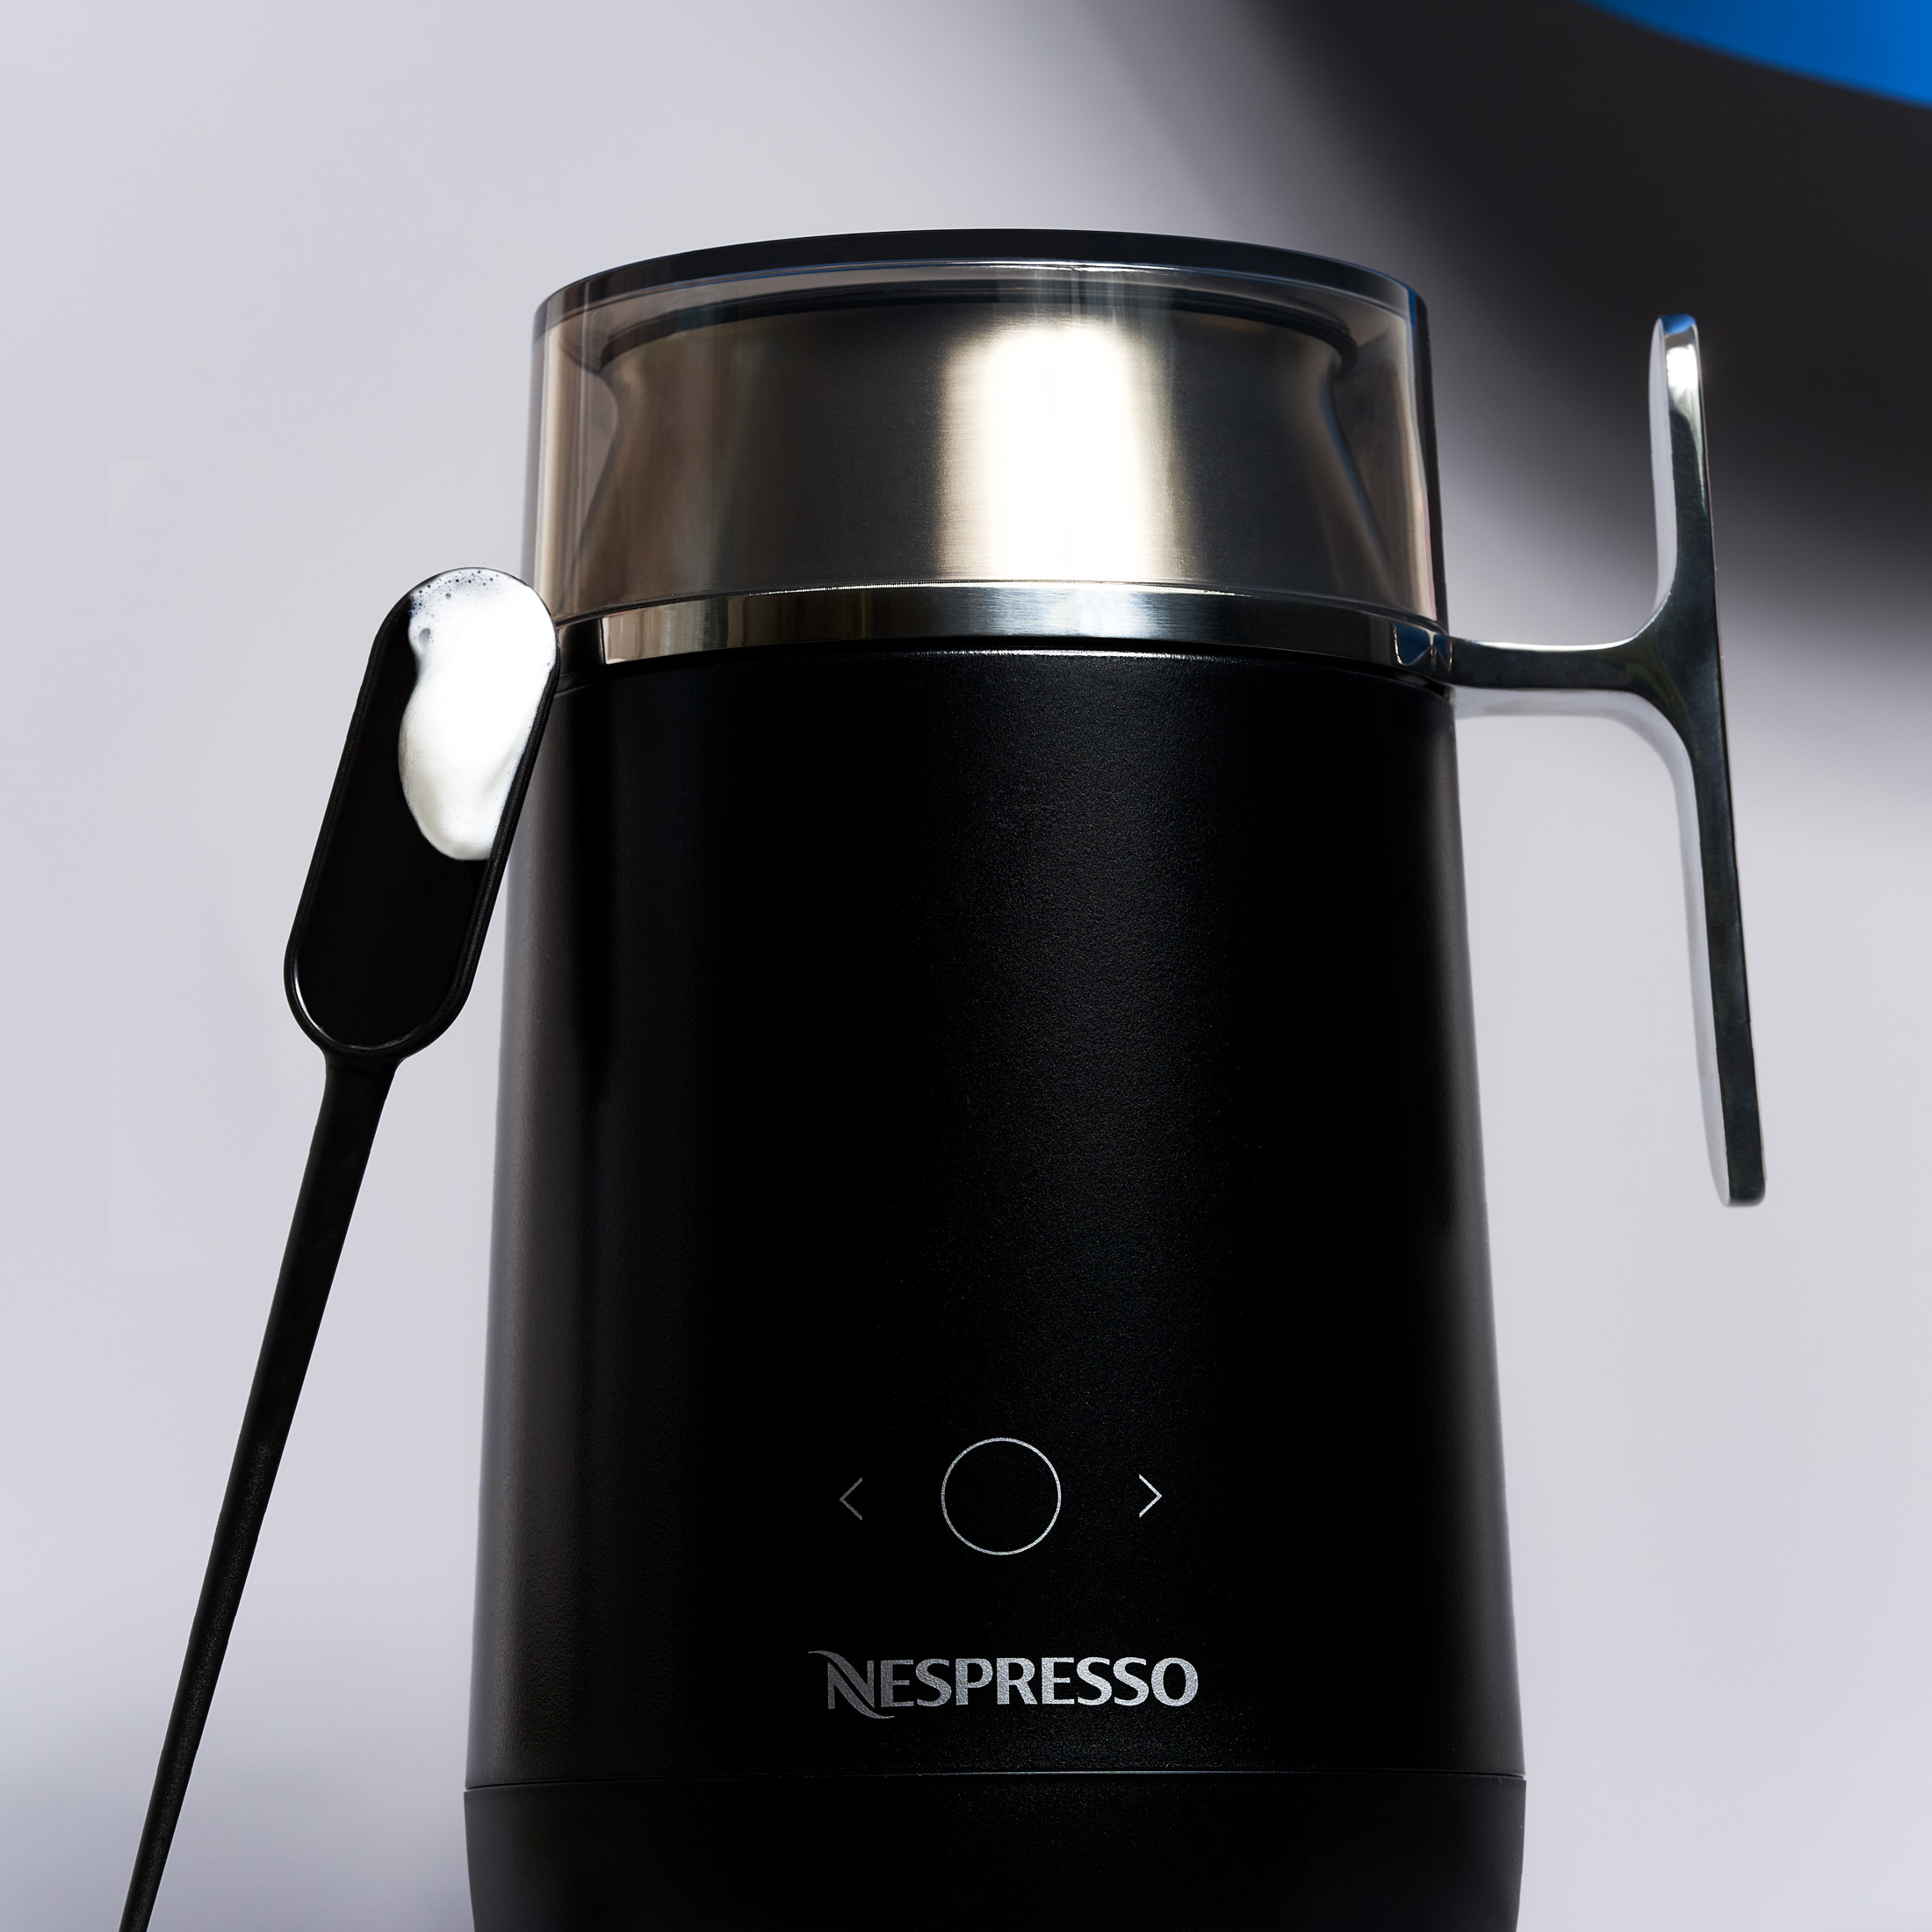 The Ultimate Nespresso Aerocinno Review - The Coffee Barrister